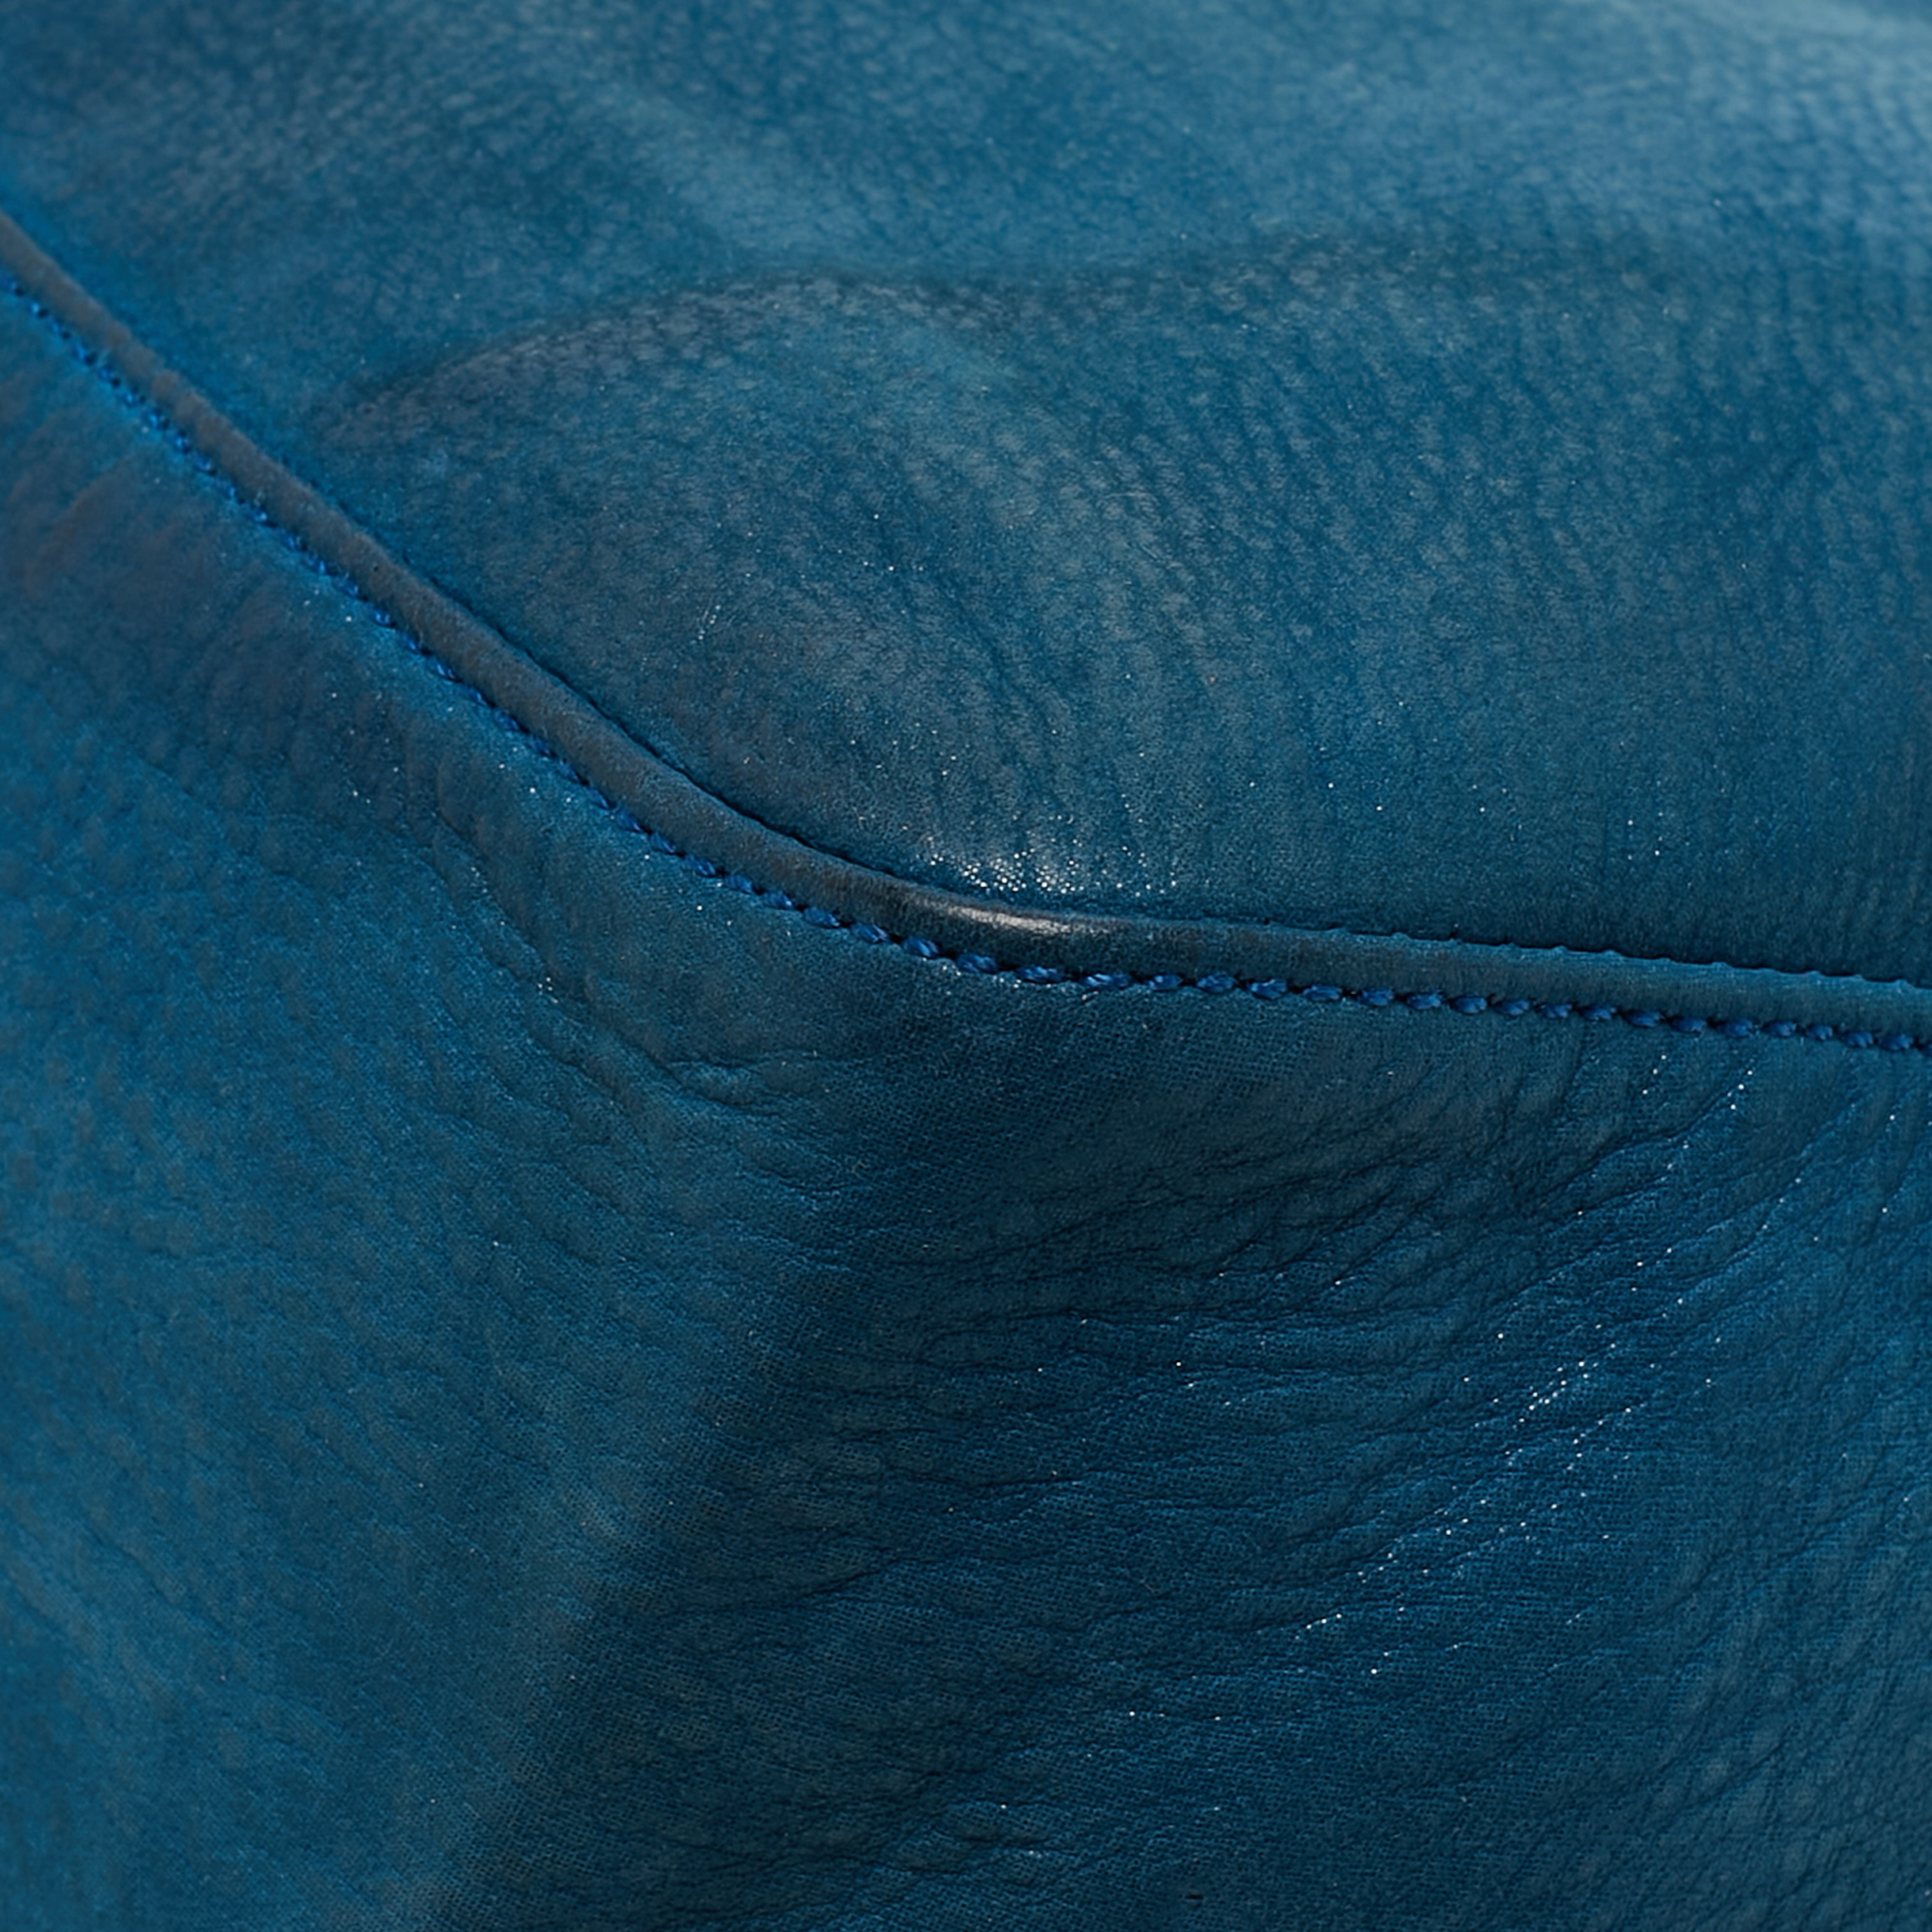 Fendi Blue Iridescent Leather Large Mama Forever Flap Shoulder Bag